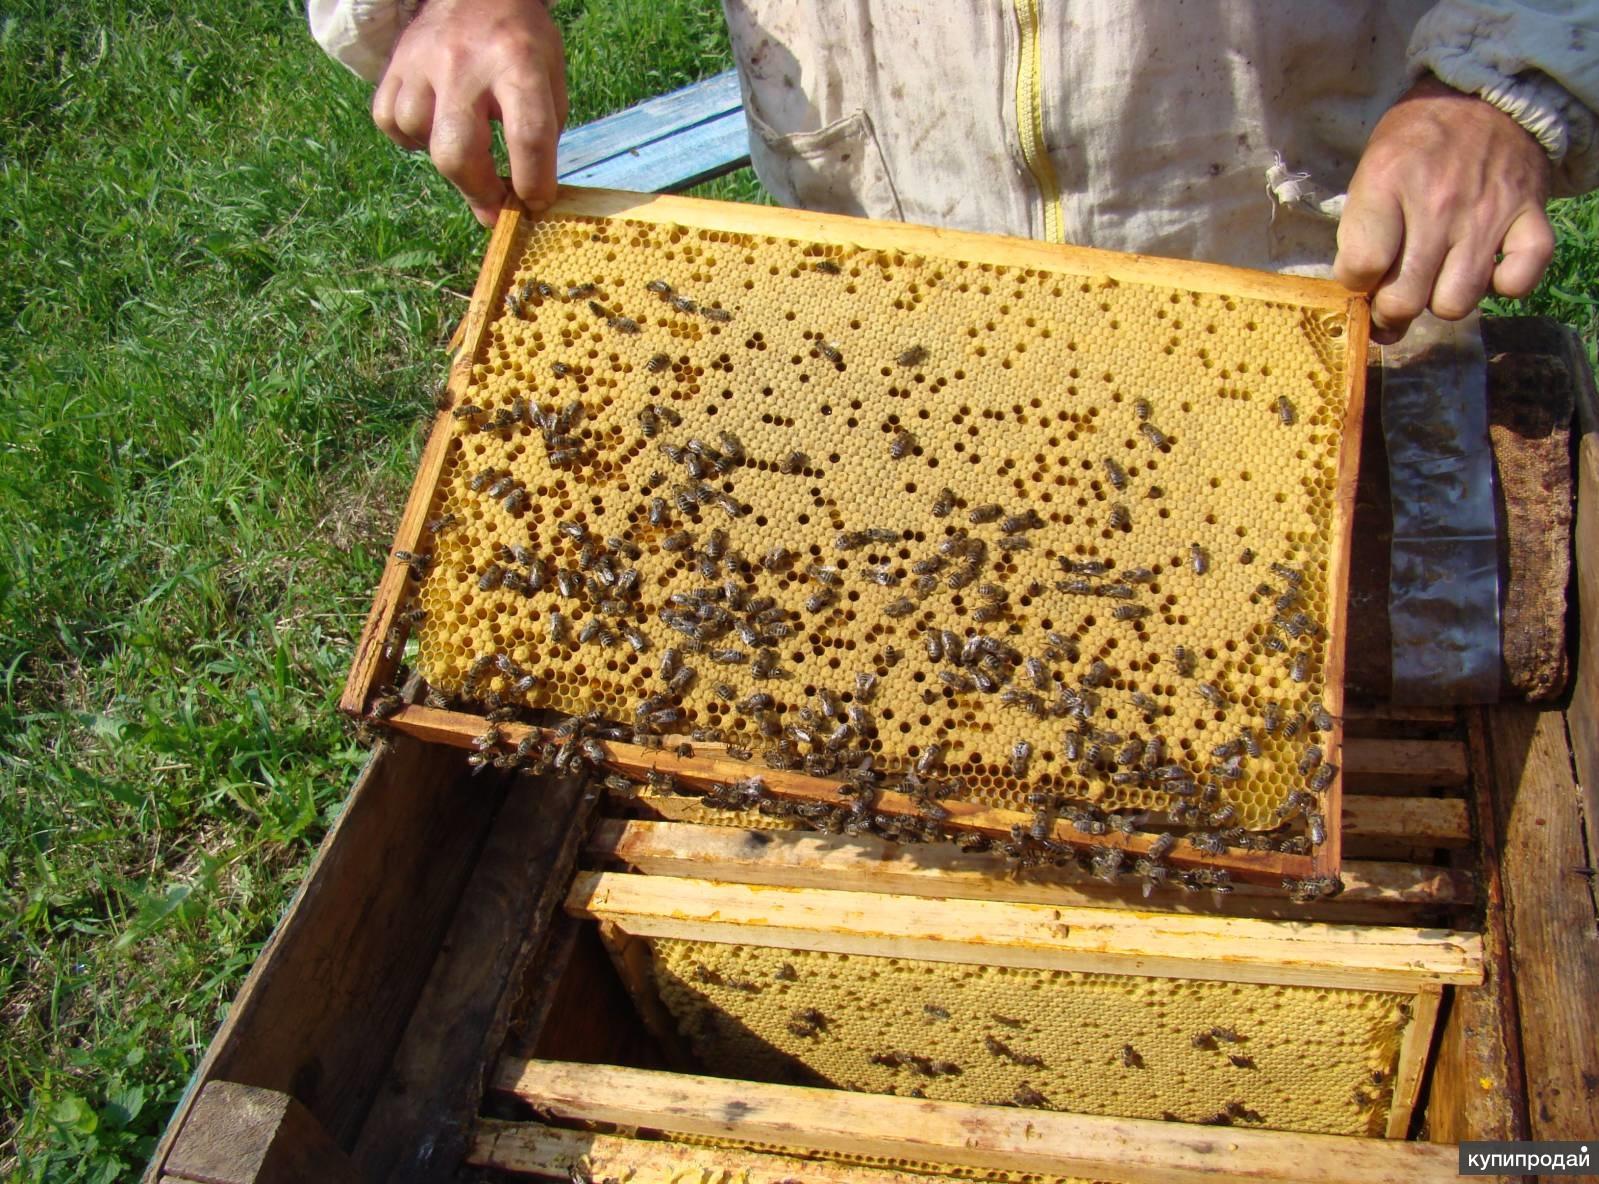 Купить пчел мордовия. Пчелы в улье. Ульи для пчел. Внутри улья пчел. Соты внутри улья.